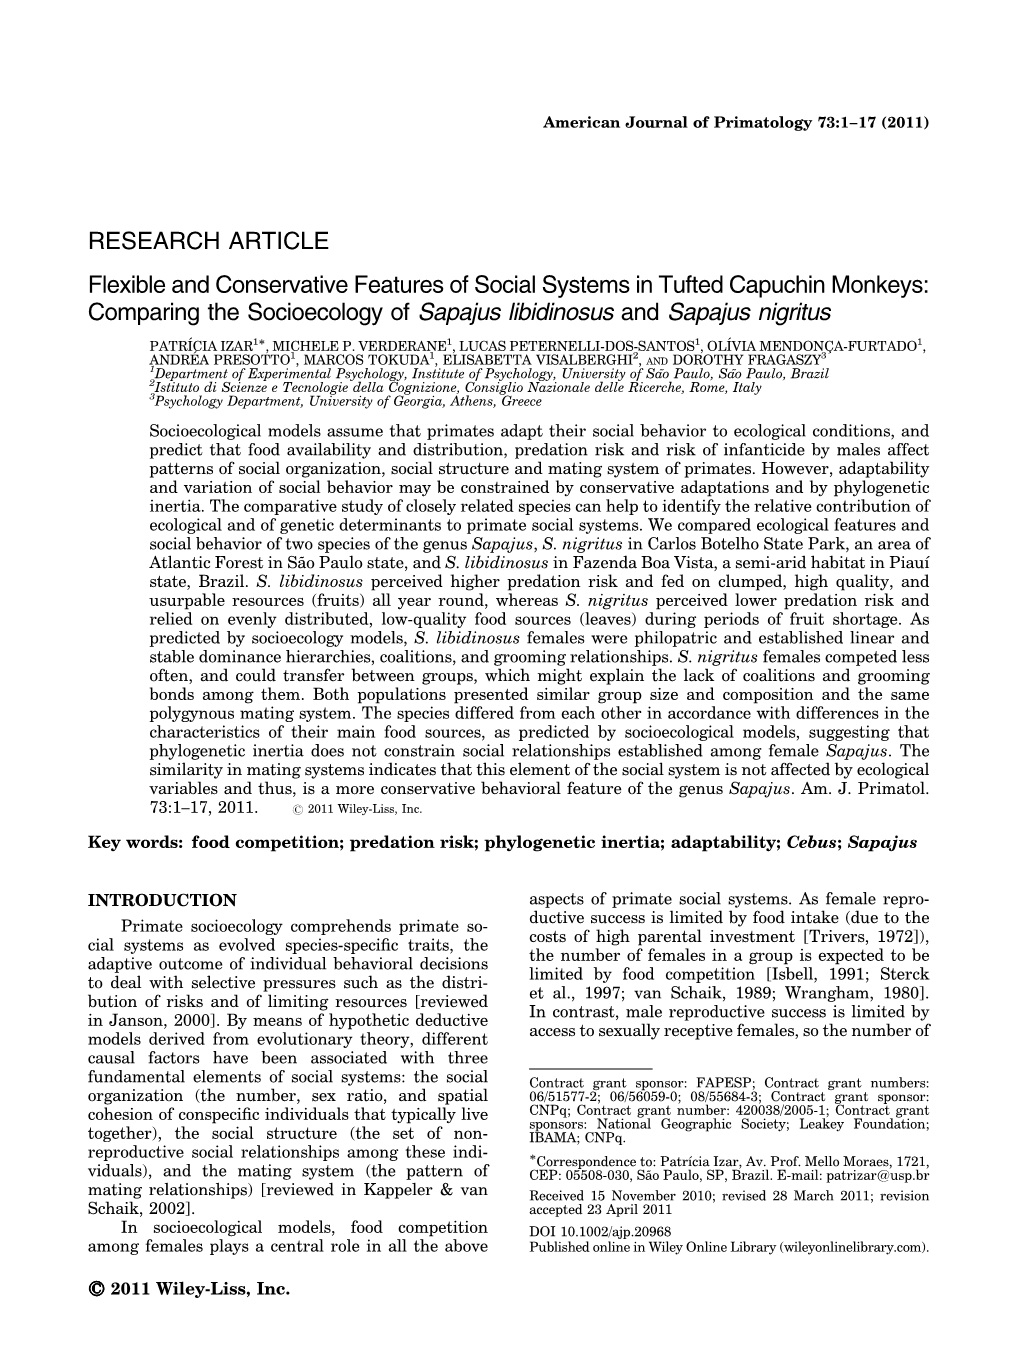 Izar Et Al. 2011B American Journal of Primatology.Pdf